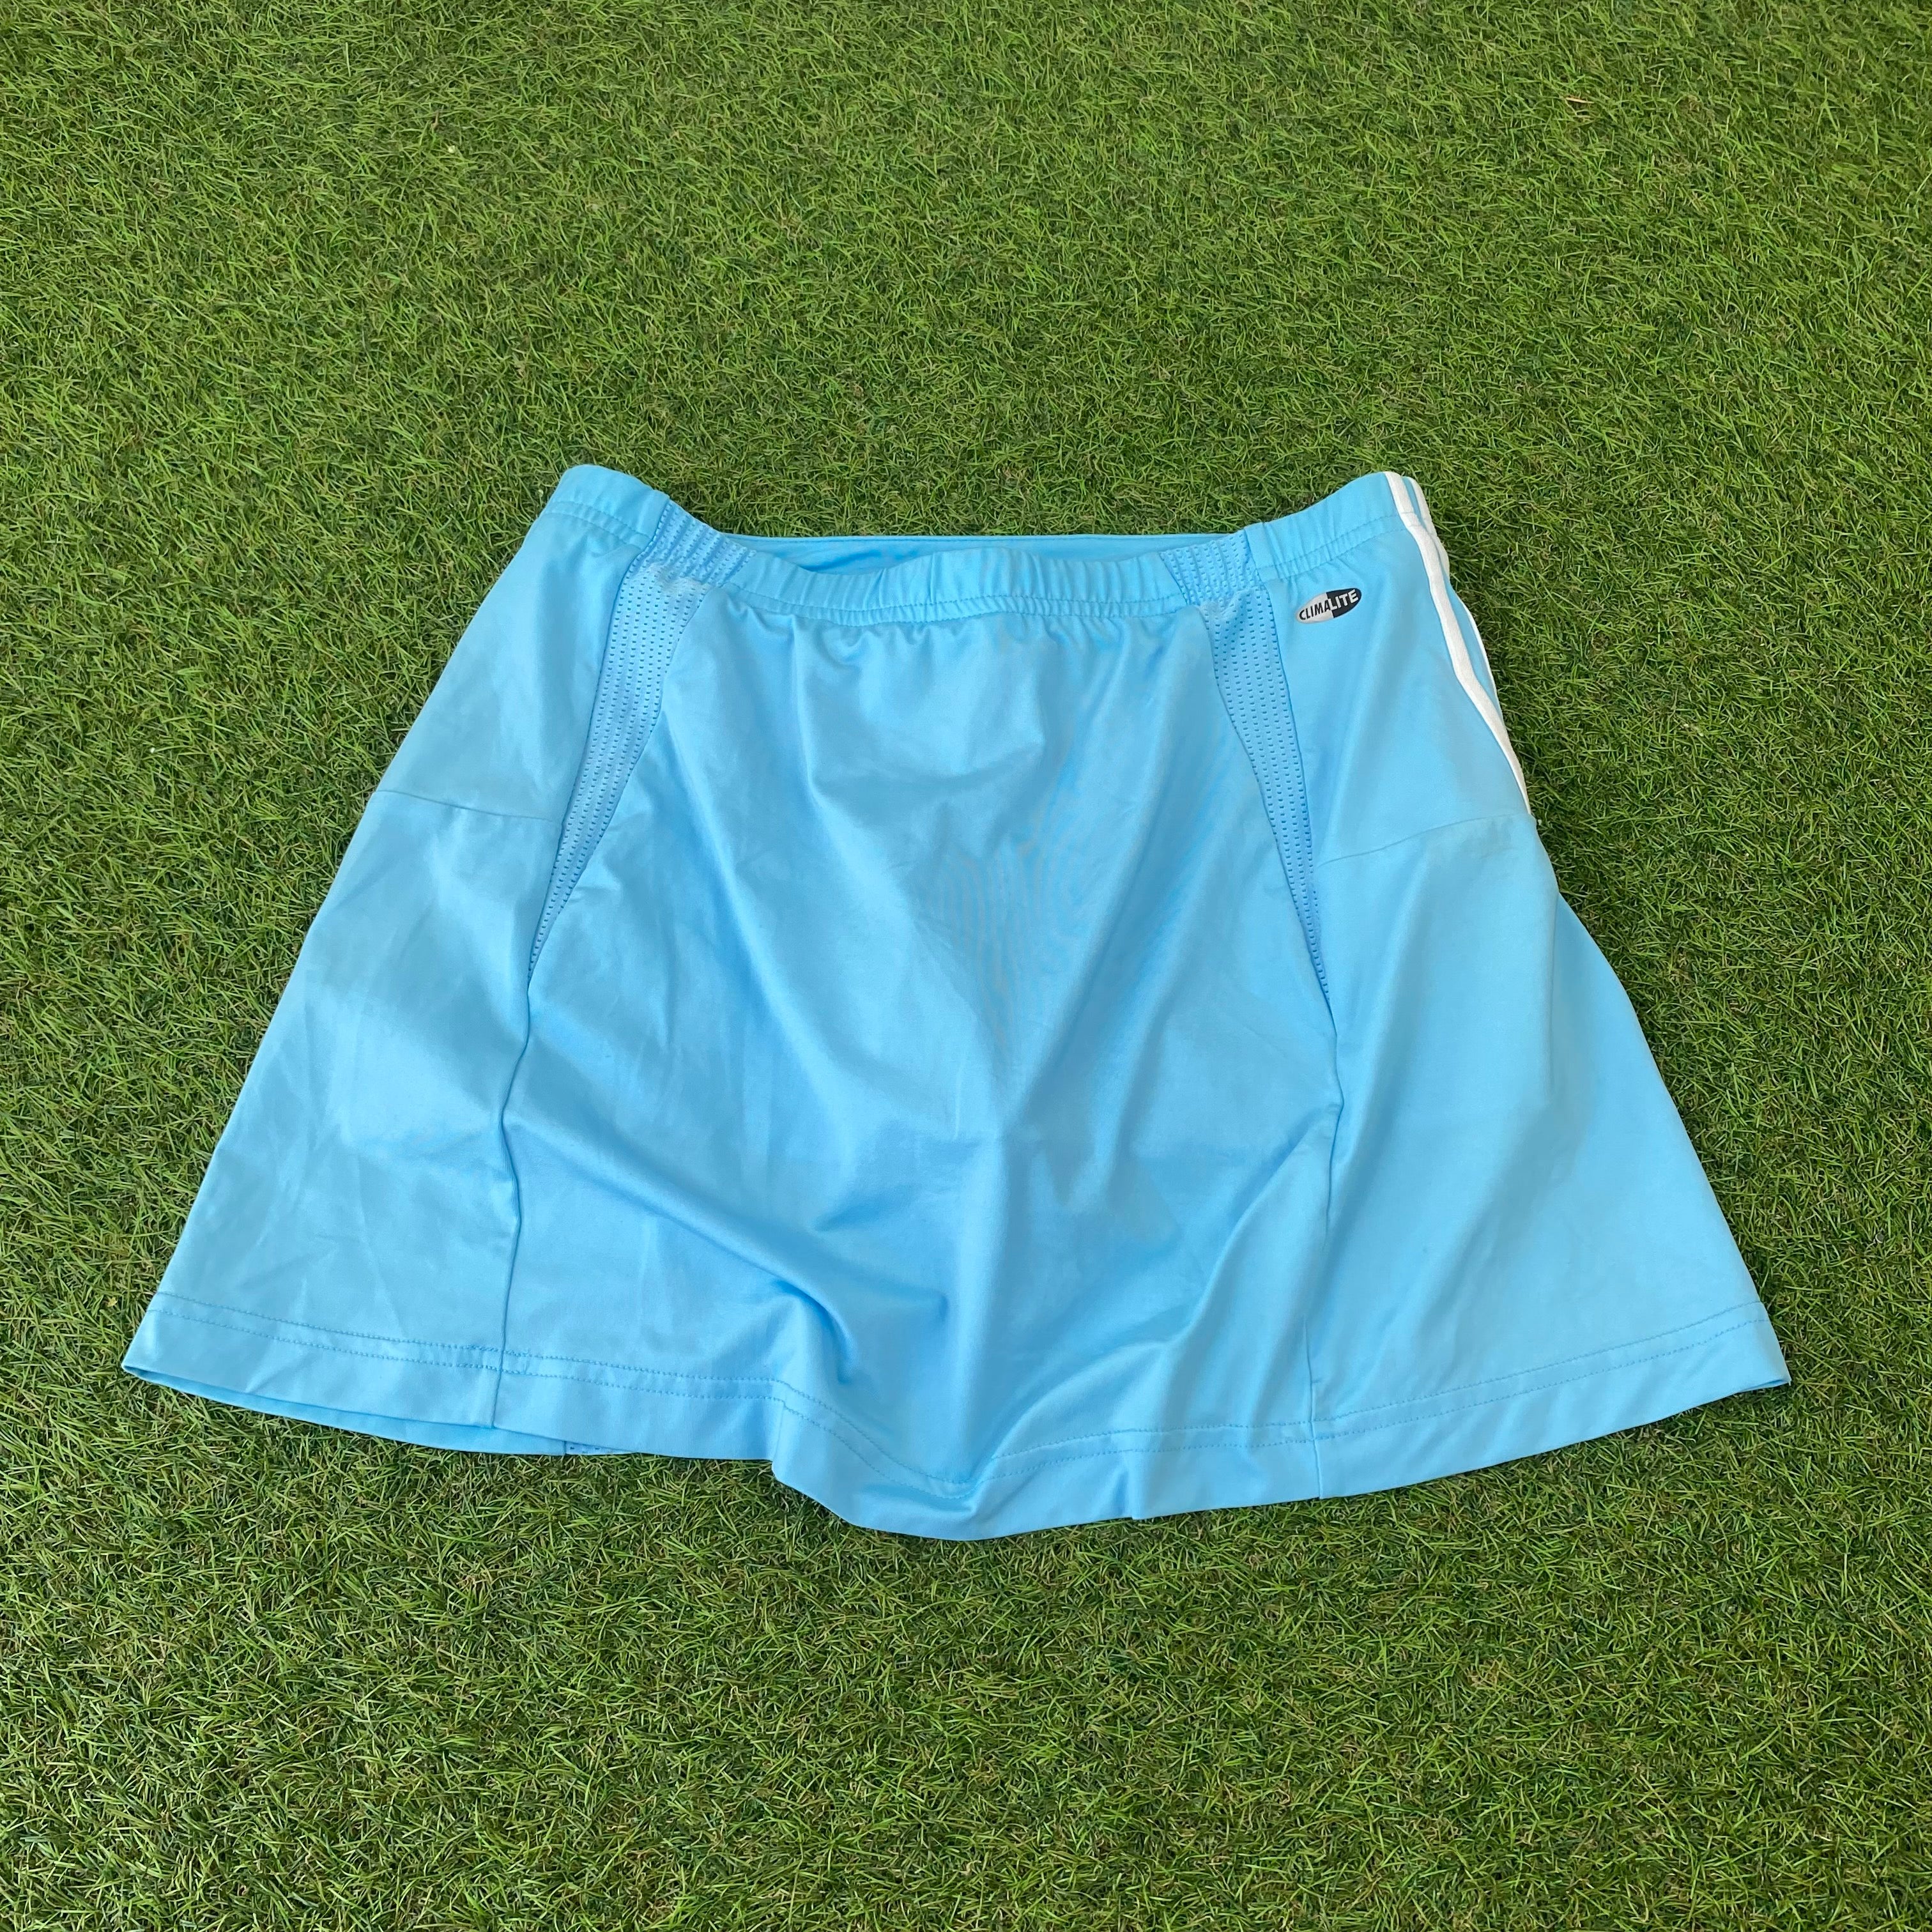 Retro Adidas Tennis Skirt Skort Baby Blue Small UK8